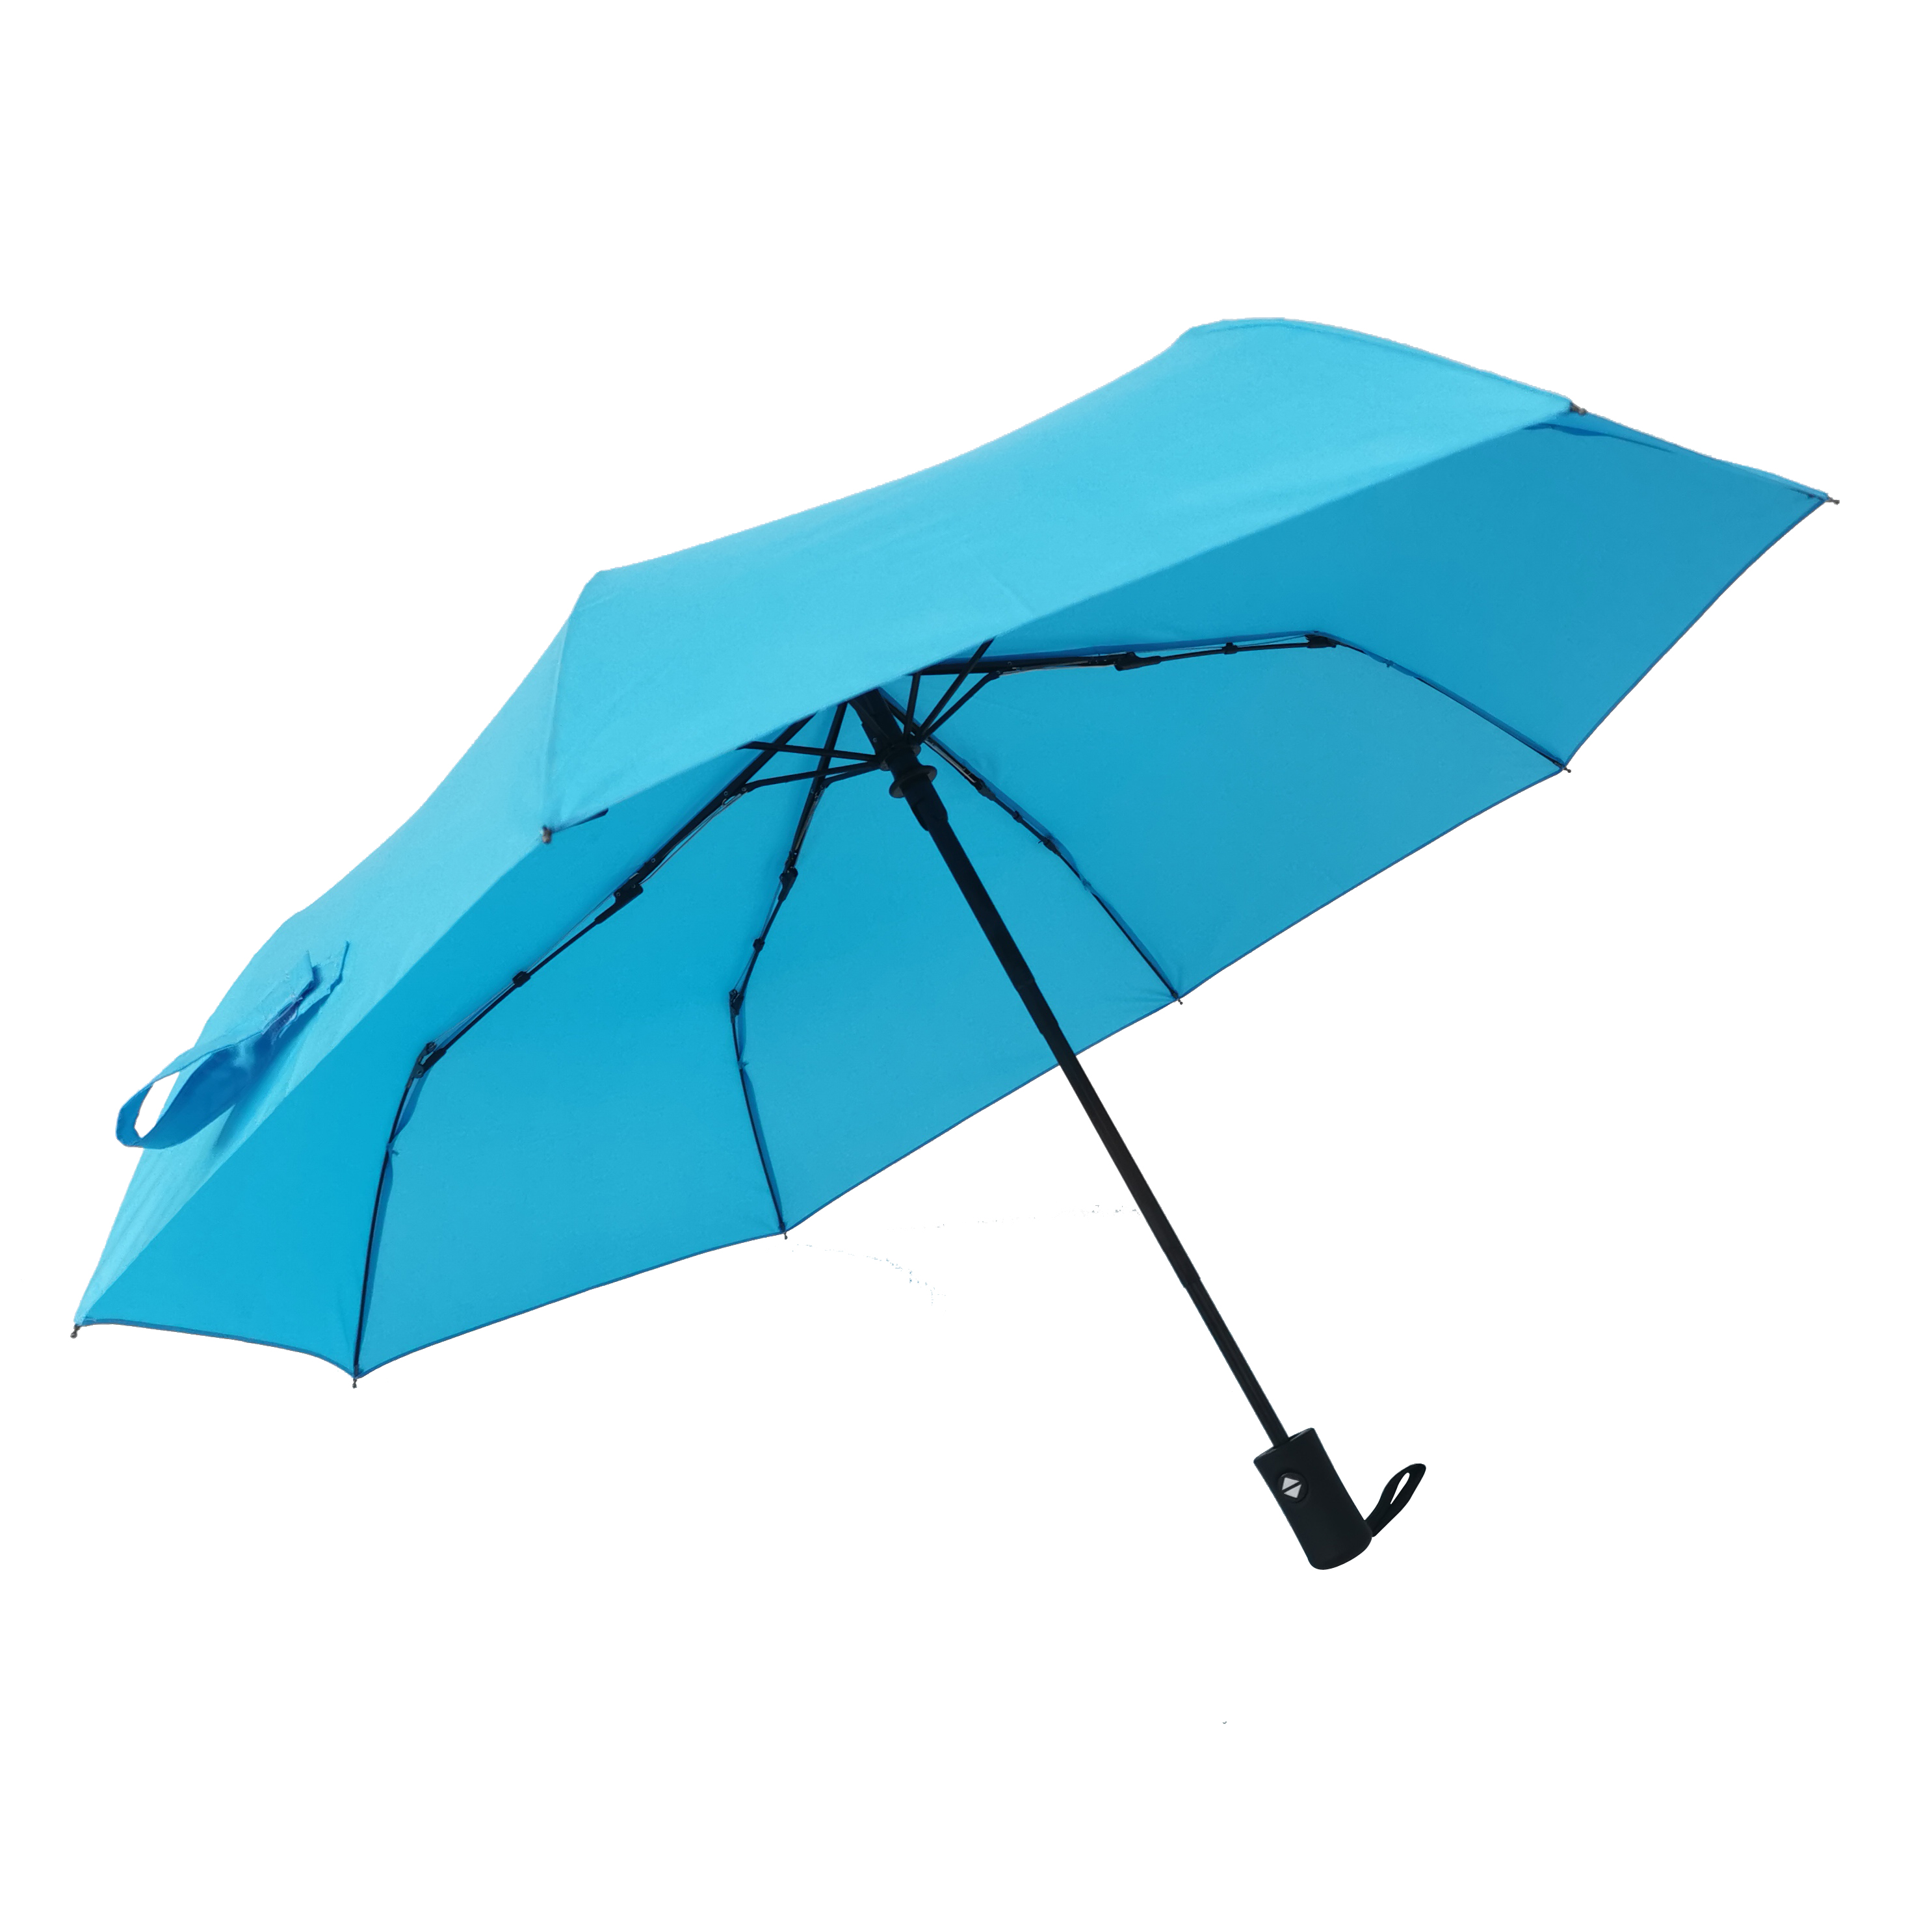 https://www.hodaumbrella.com/21-customization-full-automatic-3-folding-sunrain-umbrella-for-adult-polyester-pongee-plastic-handle-6k-8k-product/